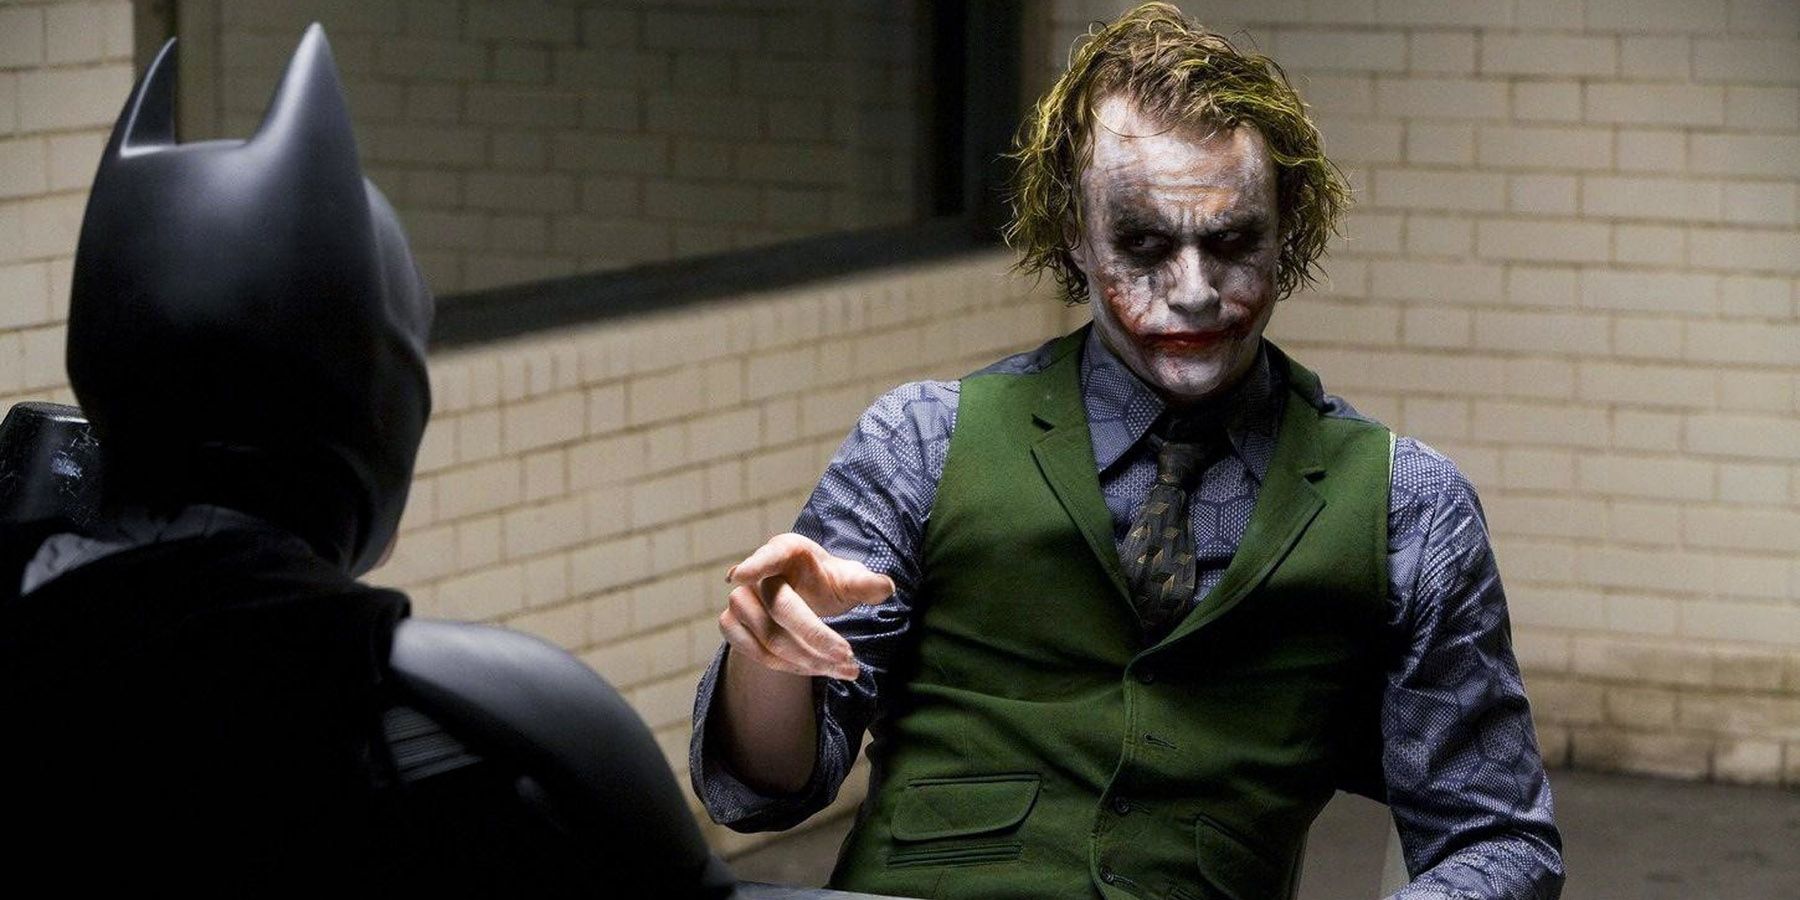 The Joker points at Batman in an interrogation room in The Dark Knight.